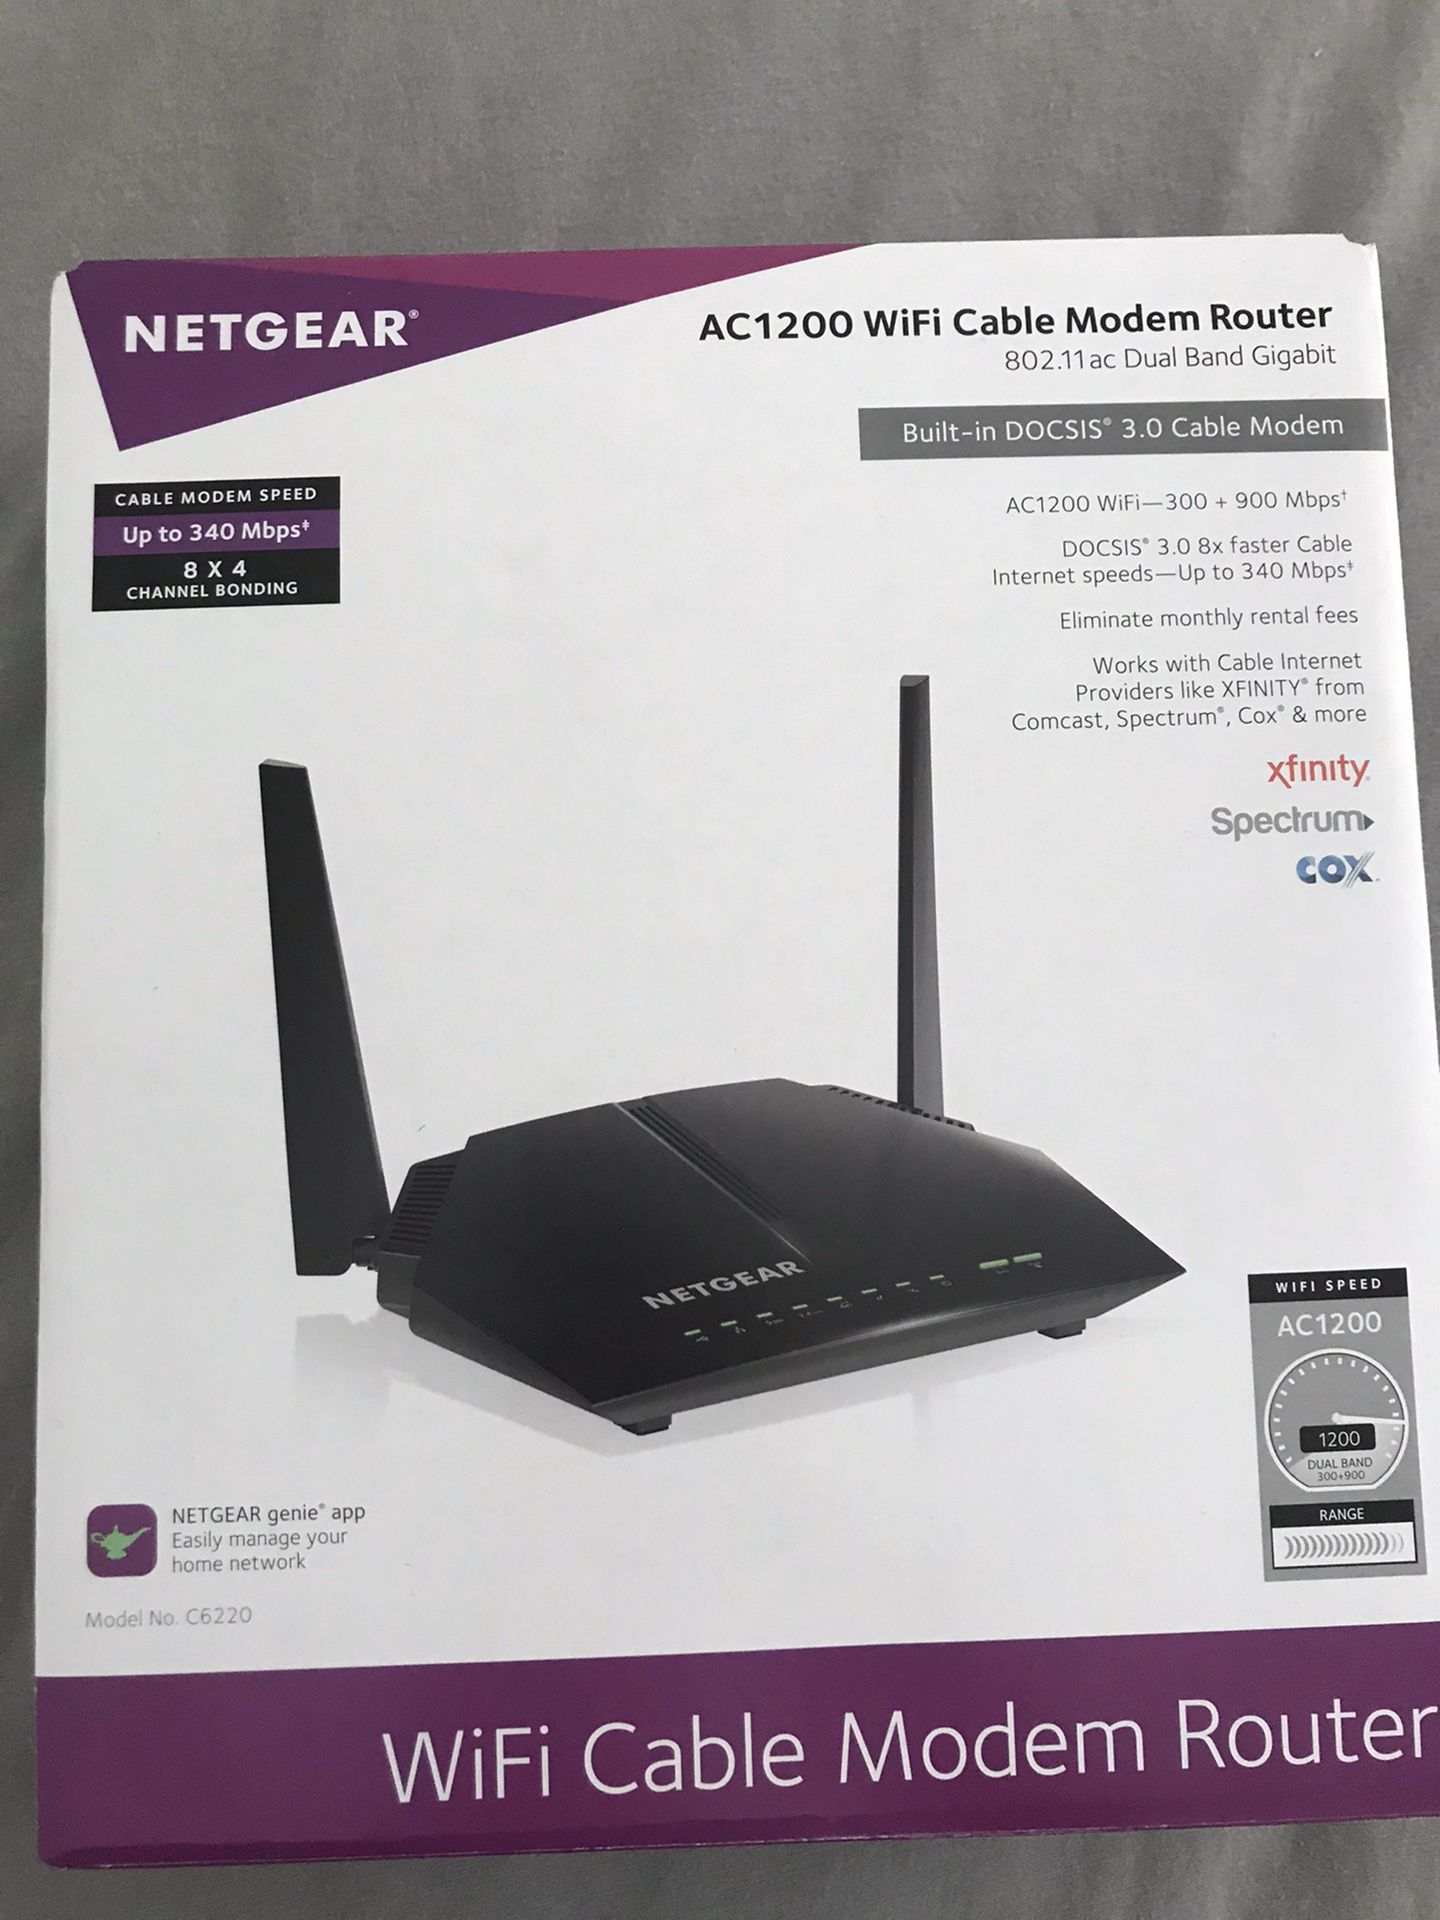 Netgear AC1200 WiFi Cable Modem Router